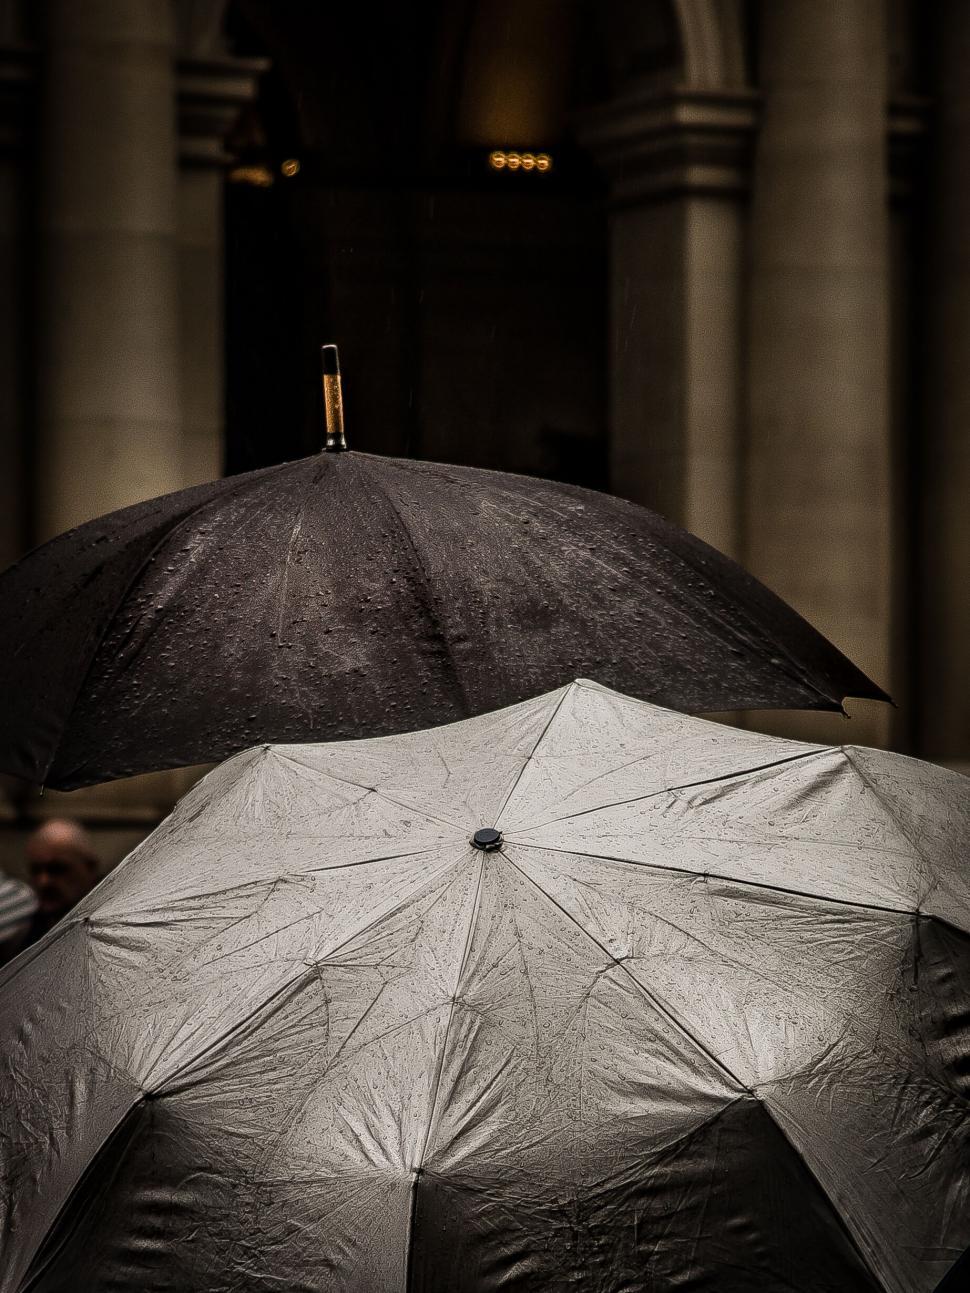 Free Image of Umbrellas in urban setting on rainy day 